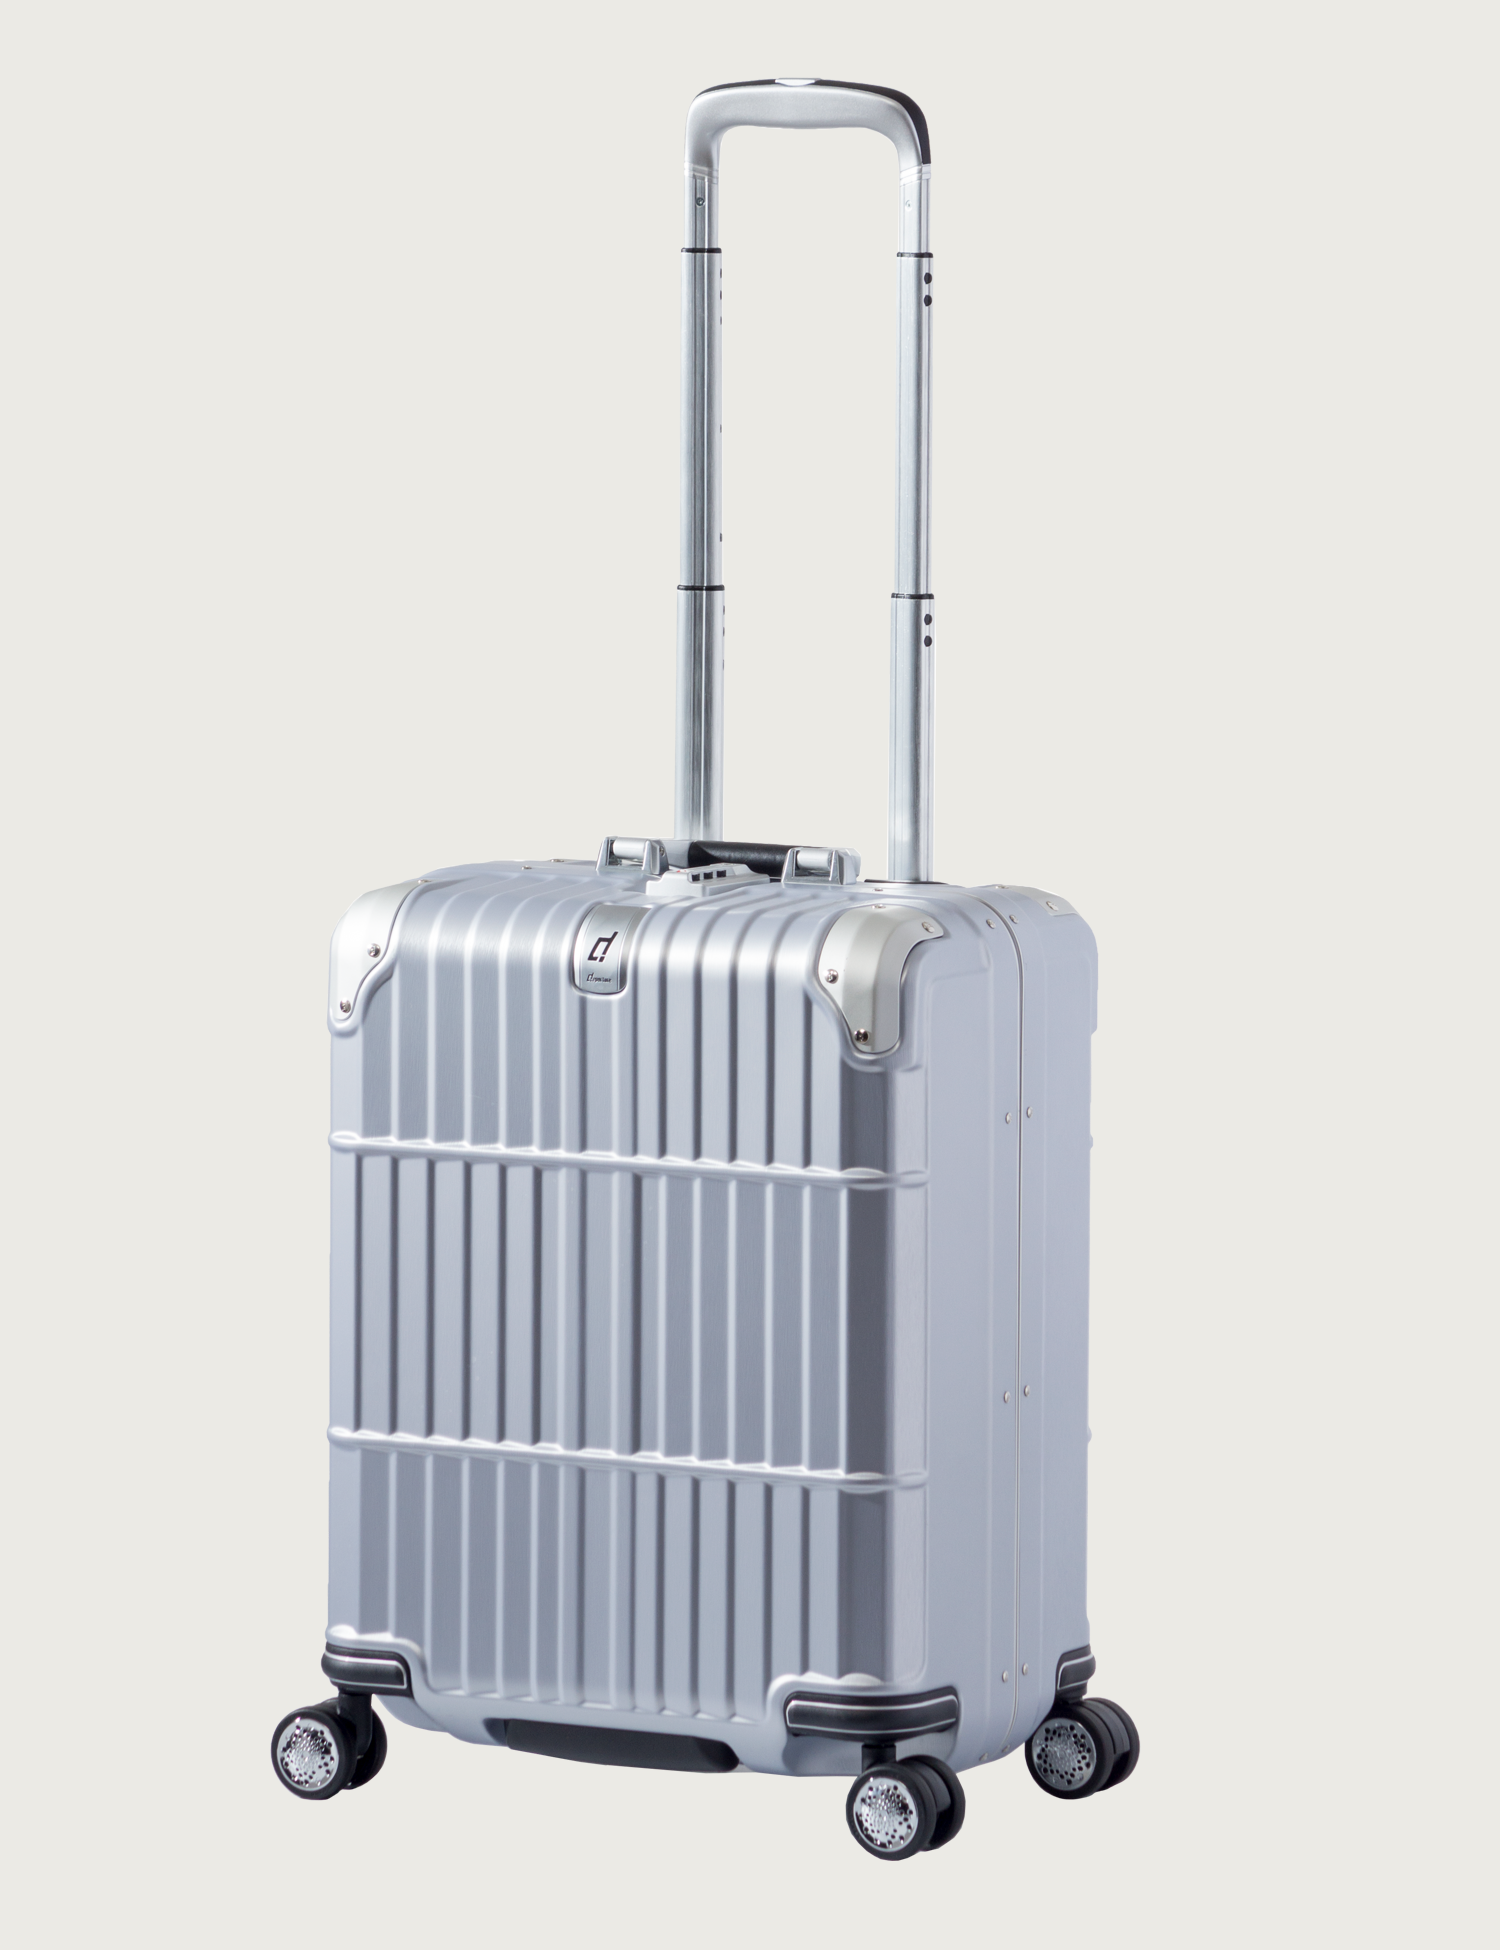 departure ディパーチャー アジア・ラゲージのスーツケース | アジア・ラゲージ 公式サイト | Asia Luggage Inc.